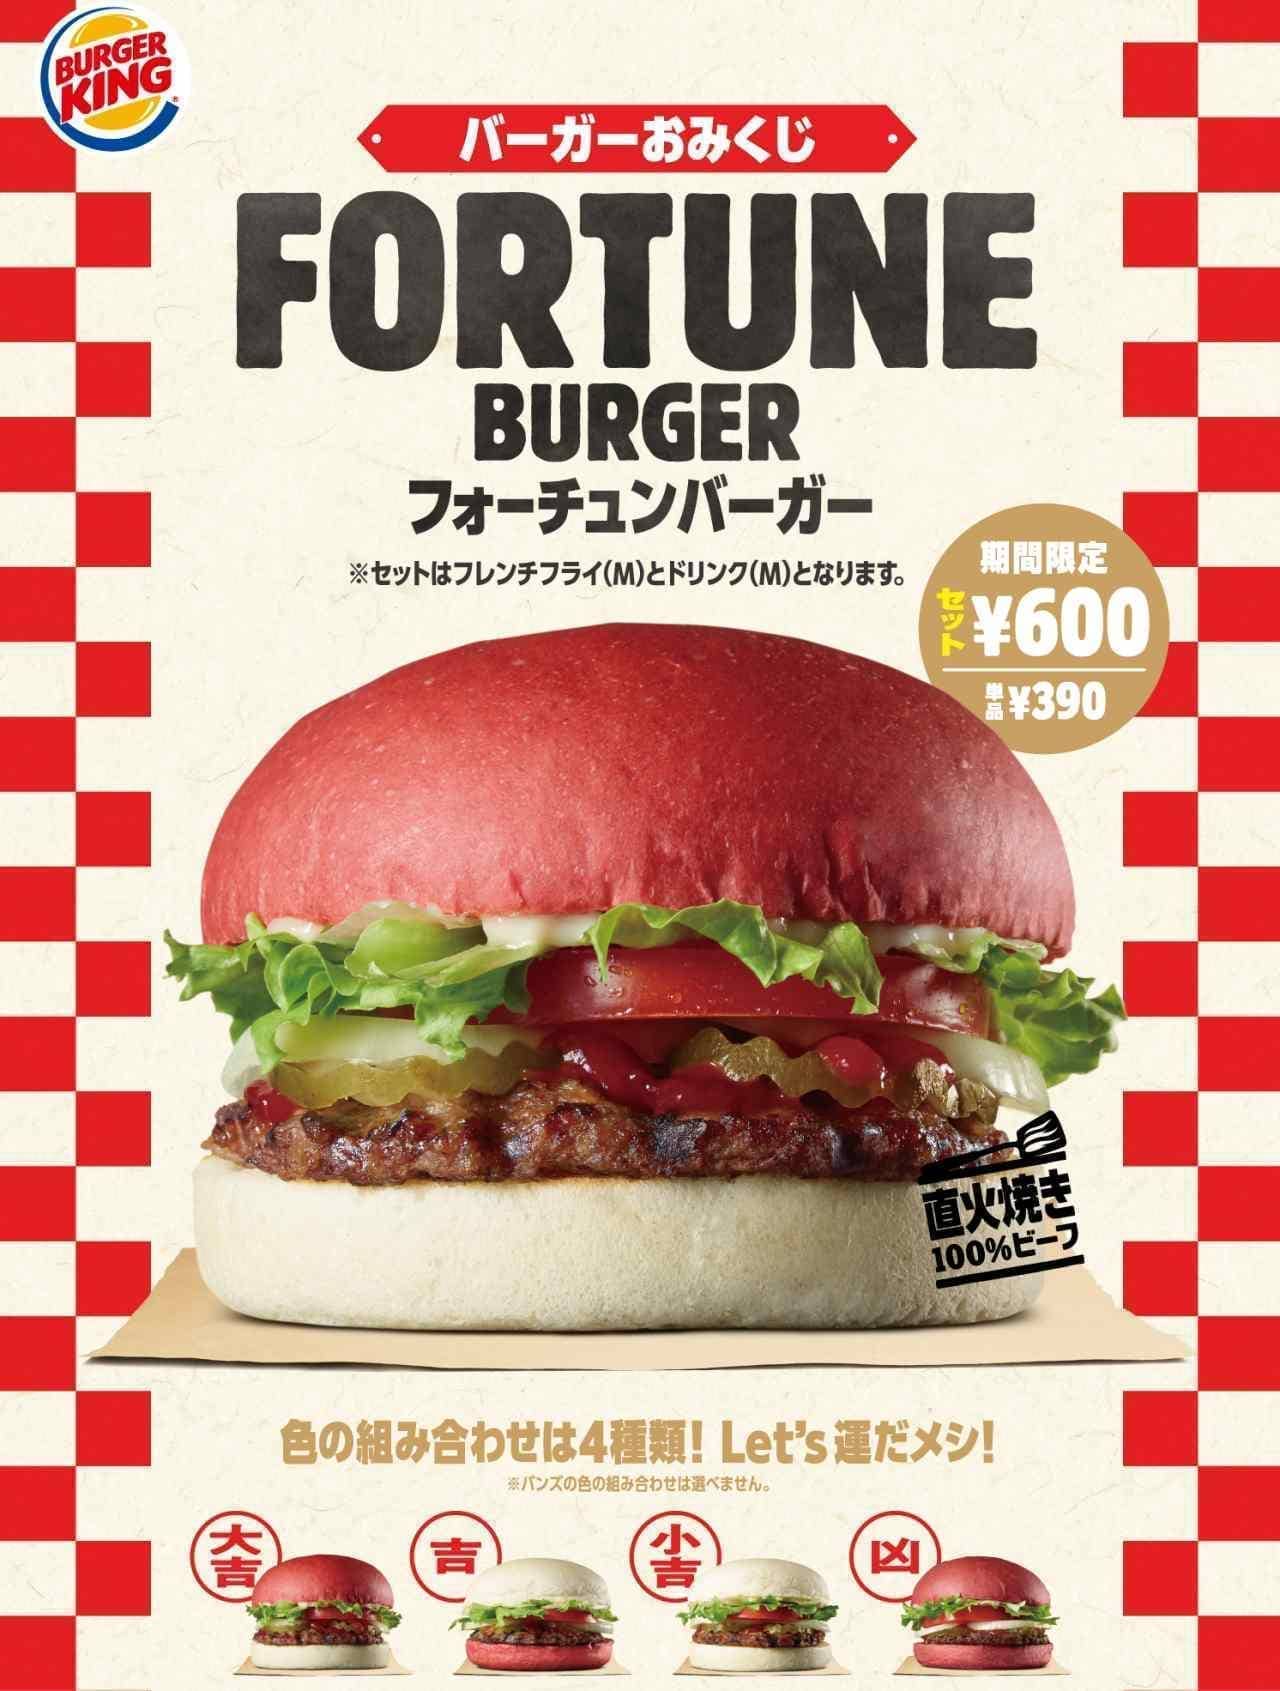 Burger King "Fortune Burger"